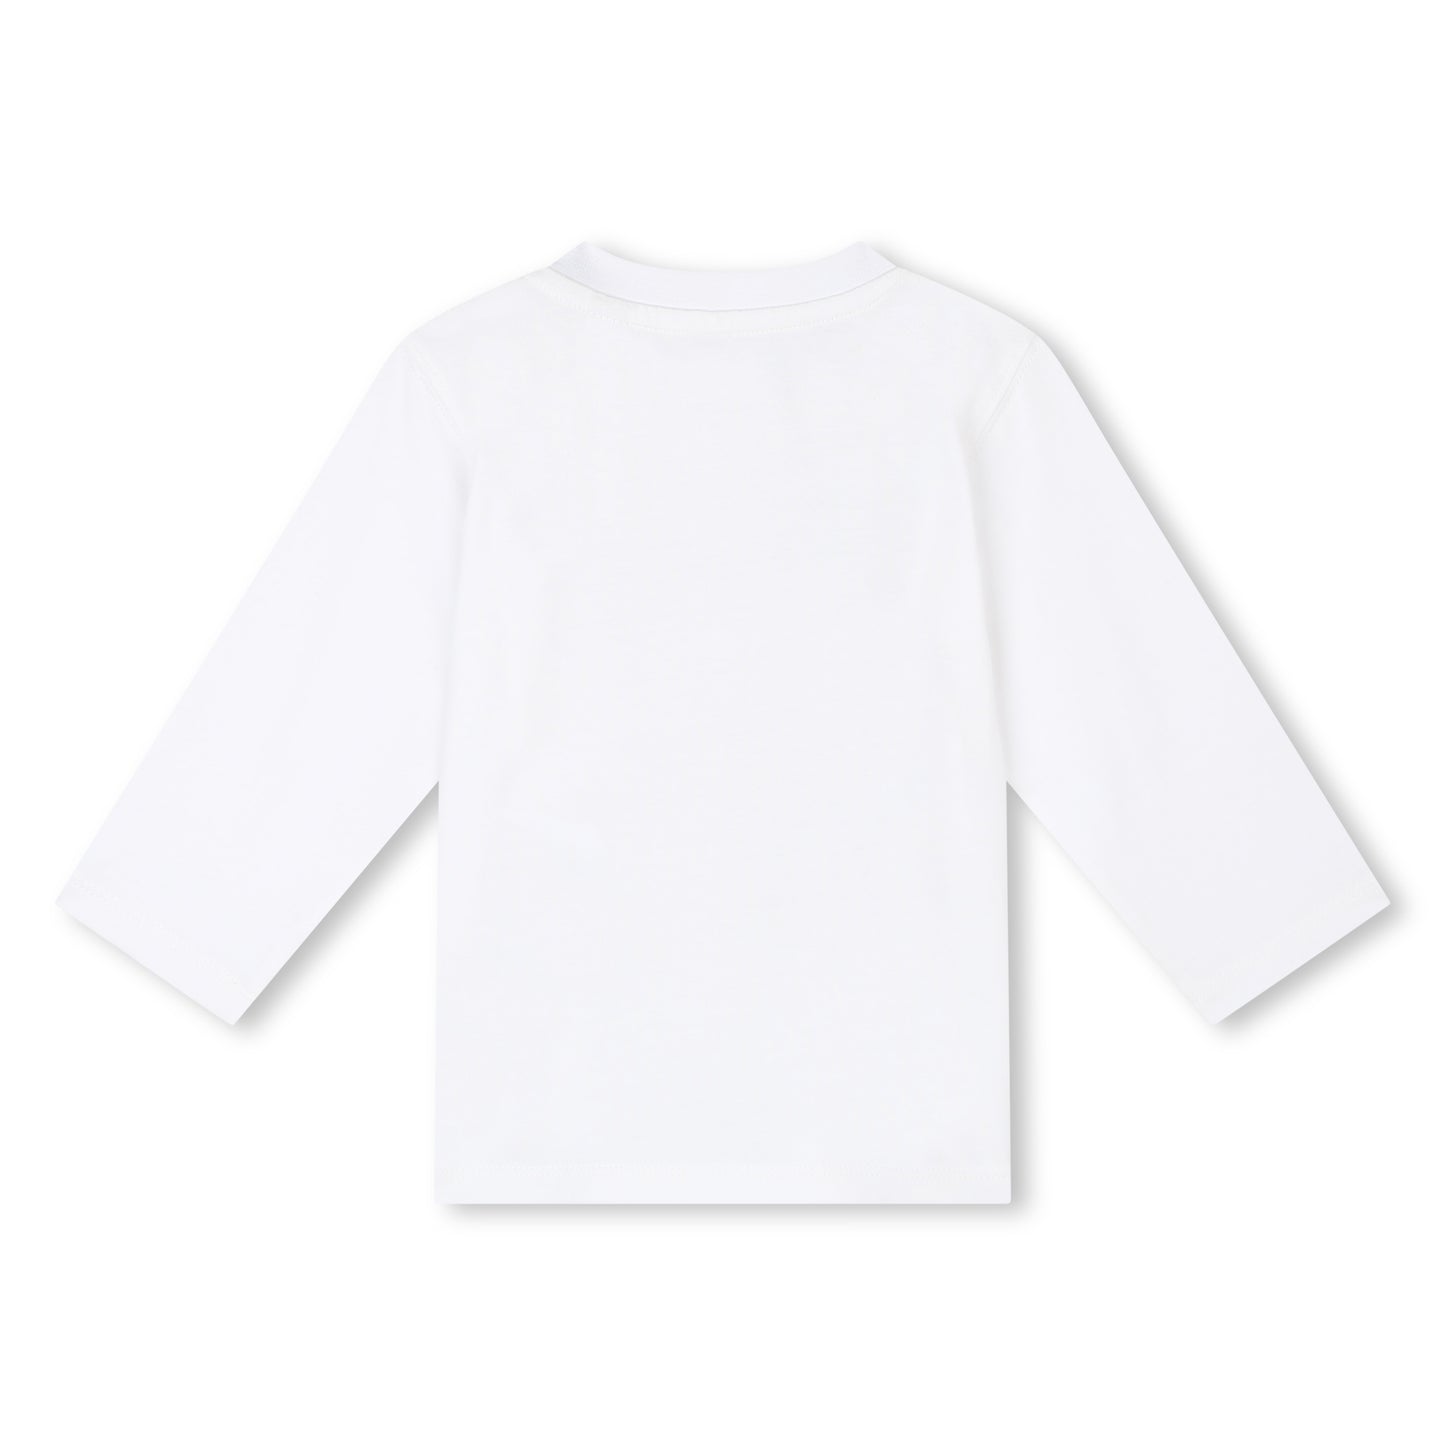 Timberland, T-shirts, Timberland - Boys LS Camo T-Shirt, White